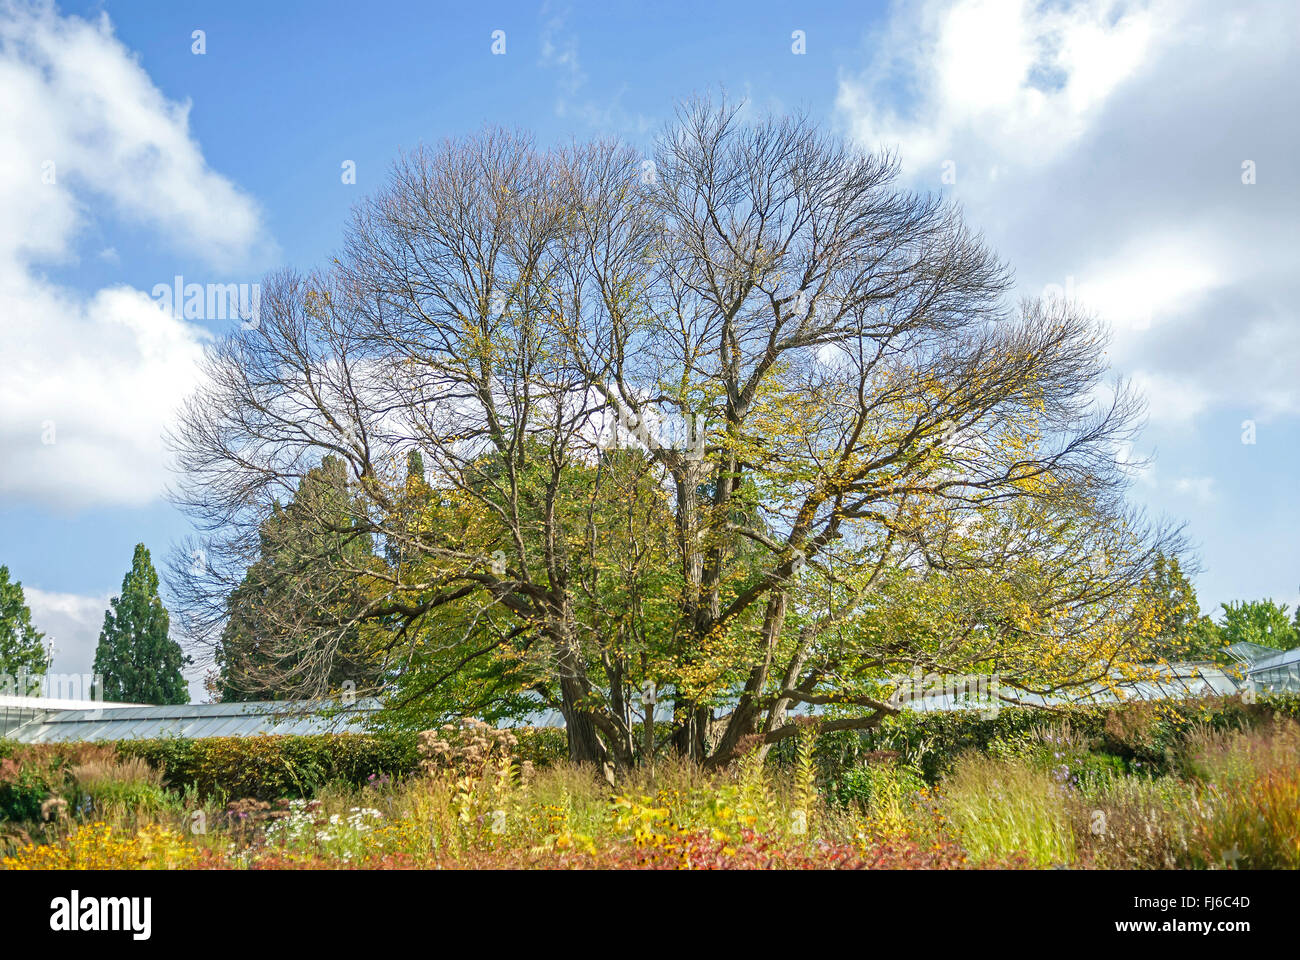 katsura tree (Cercidiphyllum japonicum), tree in a park in autumn, Germany Stock Photo